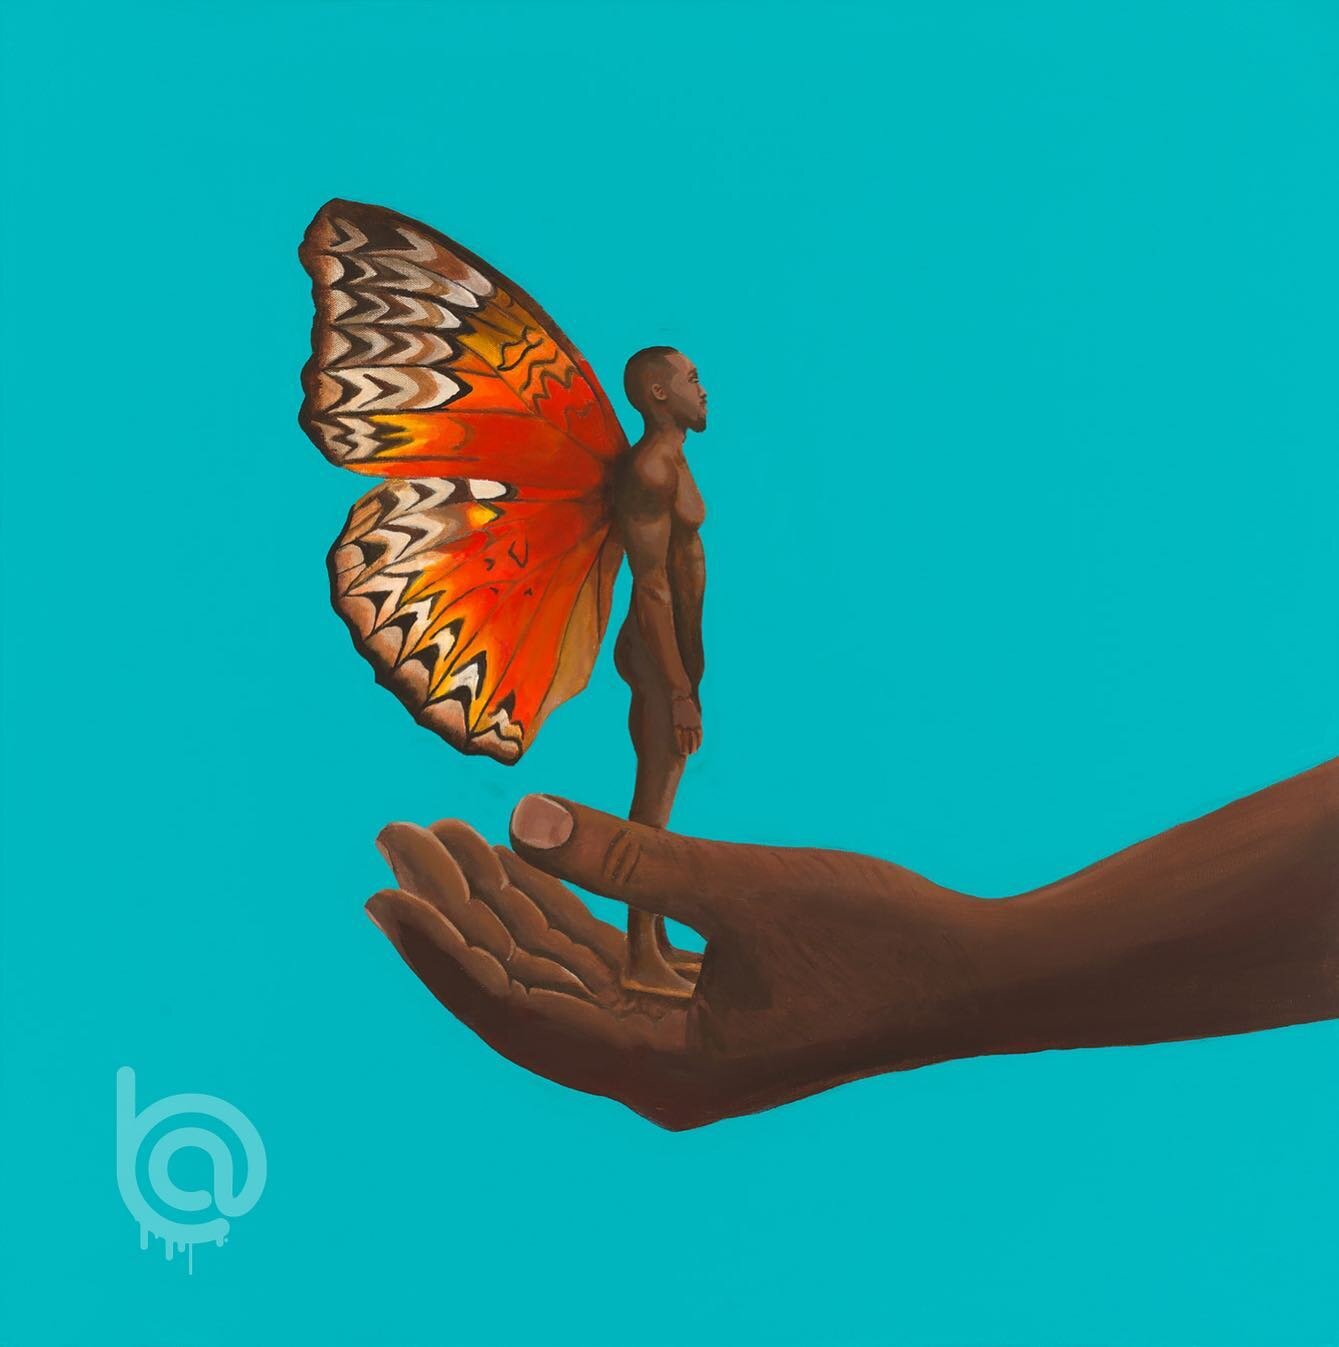 &ldquo;Evolve Series - Self Evolution&rdquo;
36 inches by 36 inches.
Acrylic on canvas.
.
.
.
.
#itsjustblake #itsjustblakeart #contemporaryart #evolution #sefimprovement #acrylicpainting #artoftheday #bayarea #artist #trasformation #butterfly #black